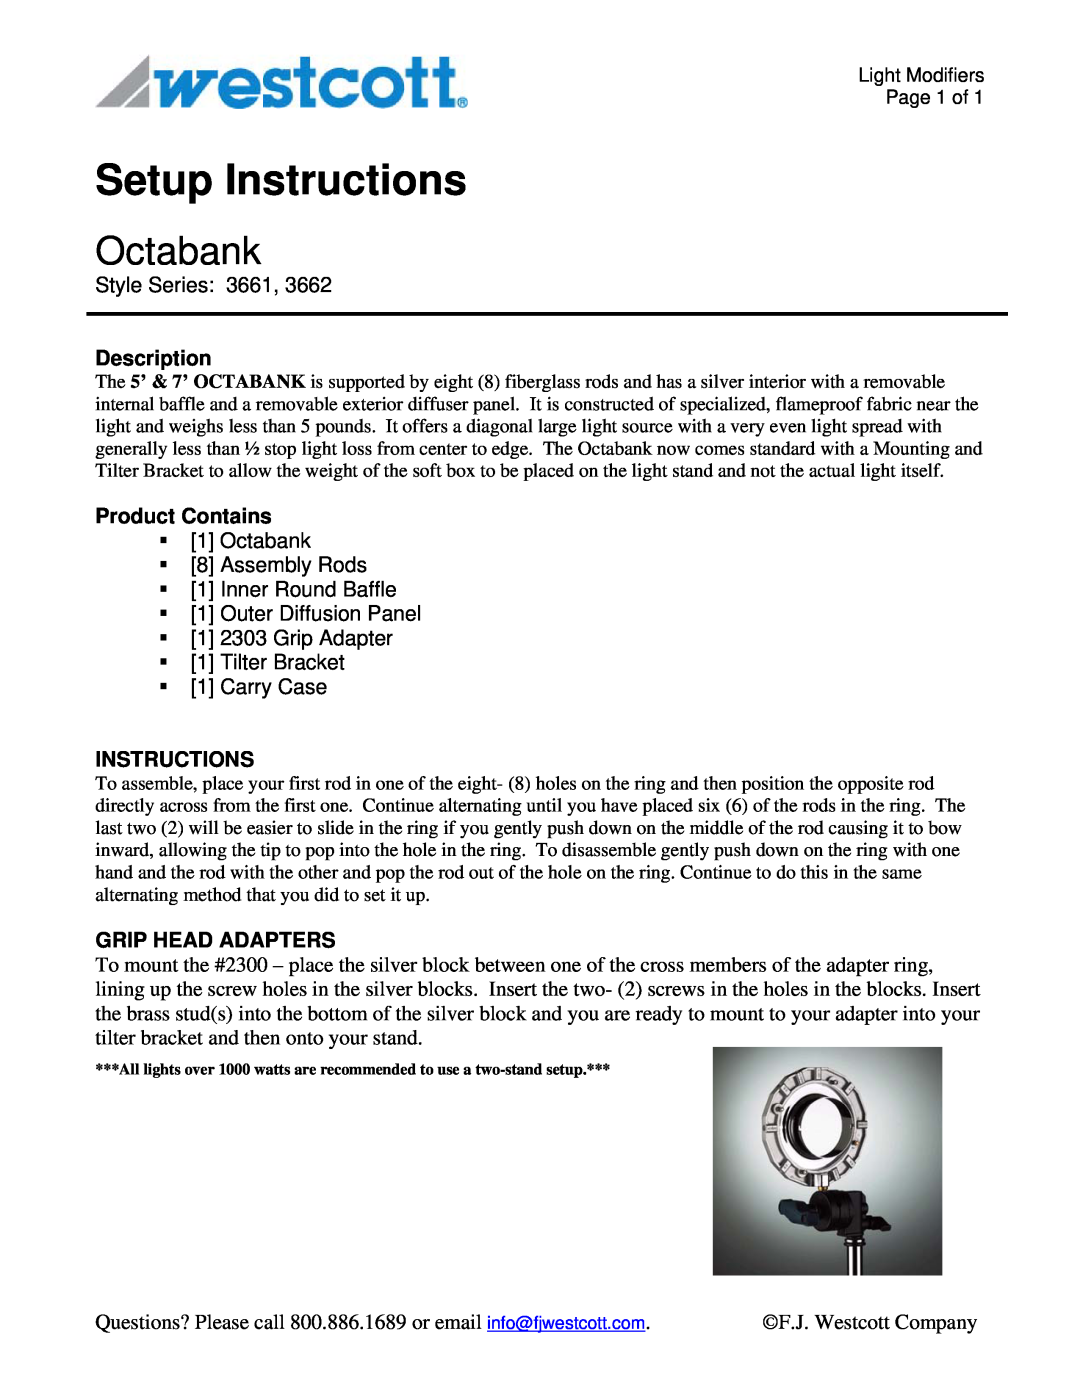 Westcott 3662 manual Setup Instructions, Octabank, Style Series 3661, Description, Product Contains, ƒ 1 Carry Case 